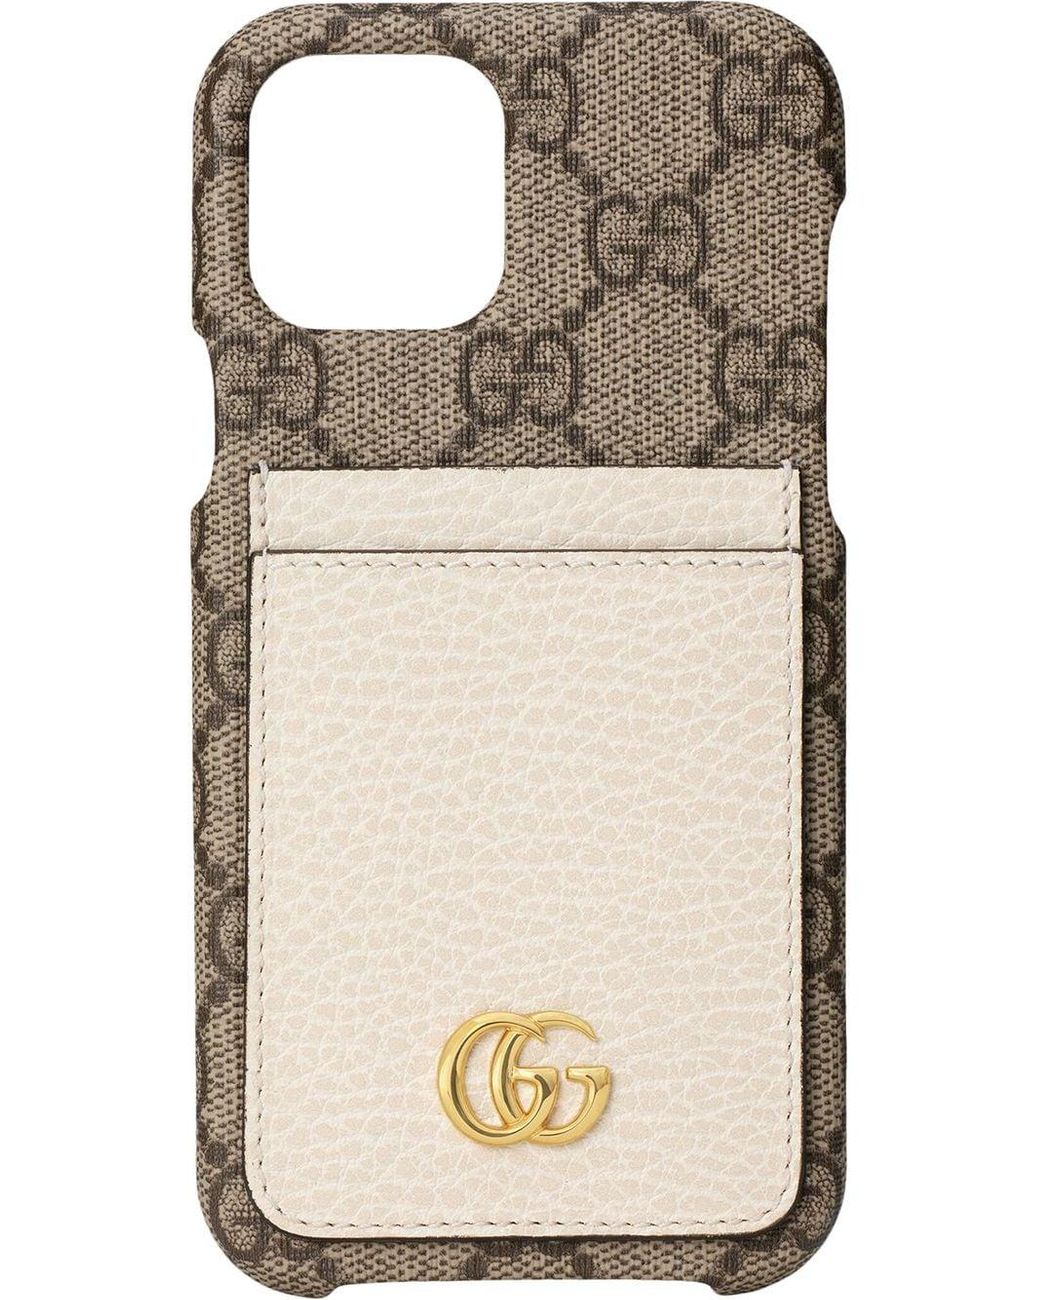 Lieve stilte Collectief Gucci GG Marmont Iphone 12 Pro Hoesje in het Naturel | Lyst NL